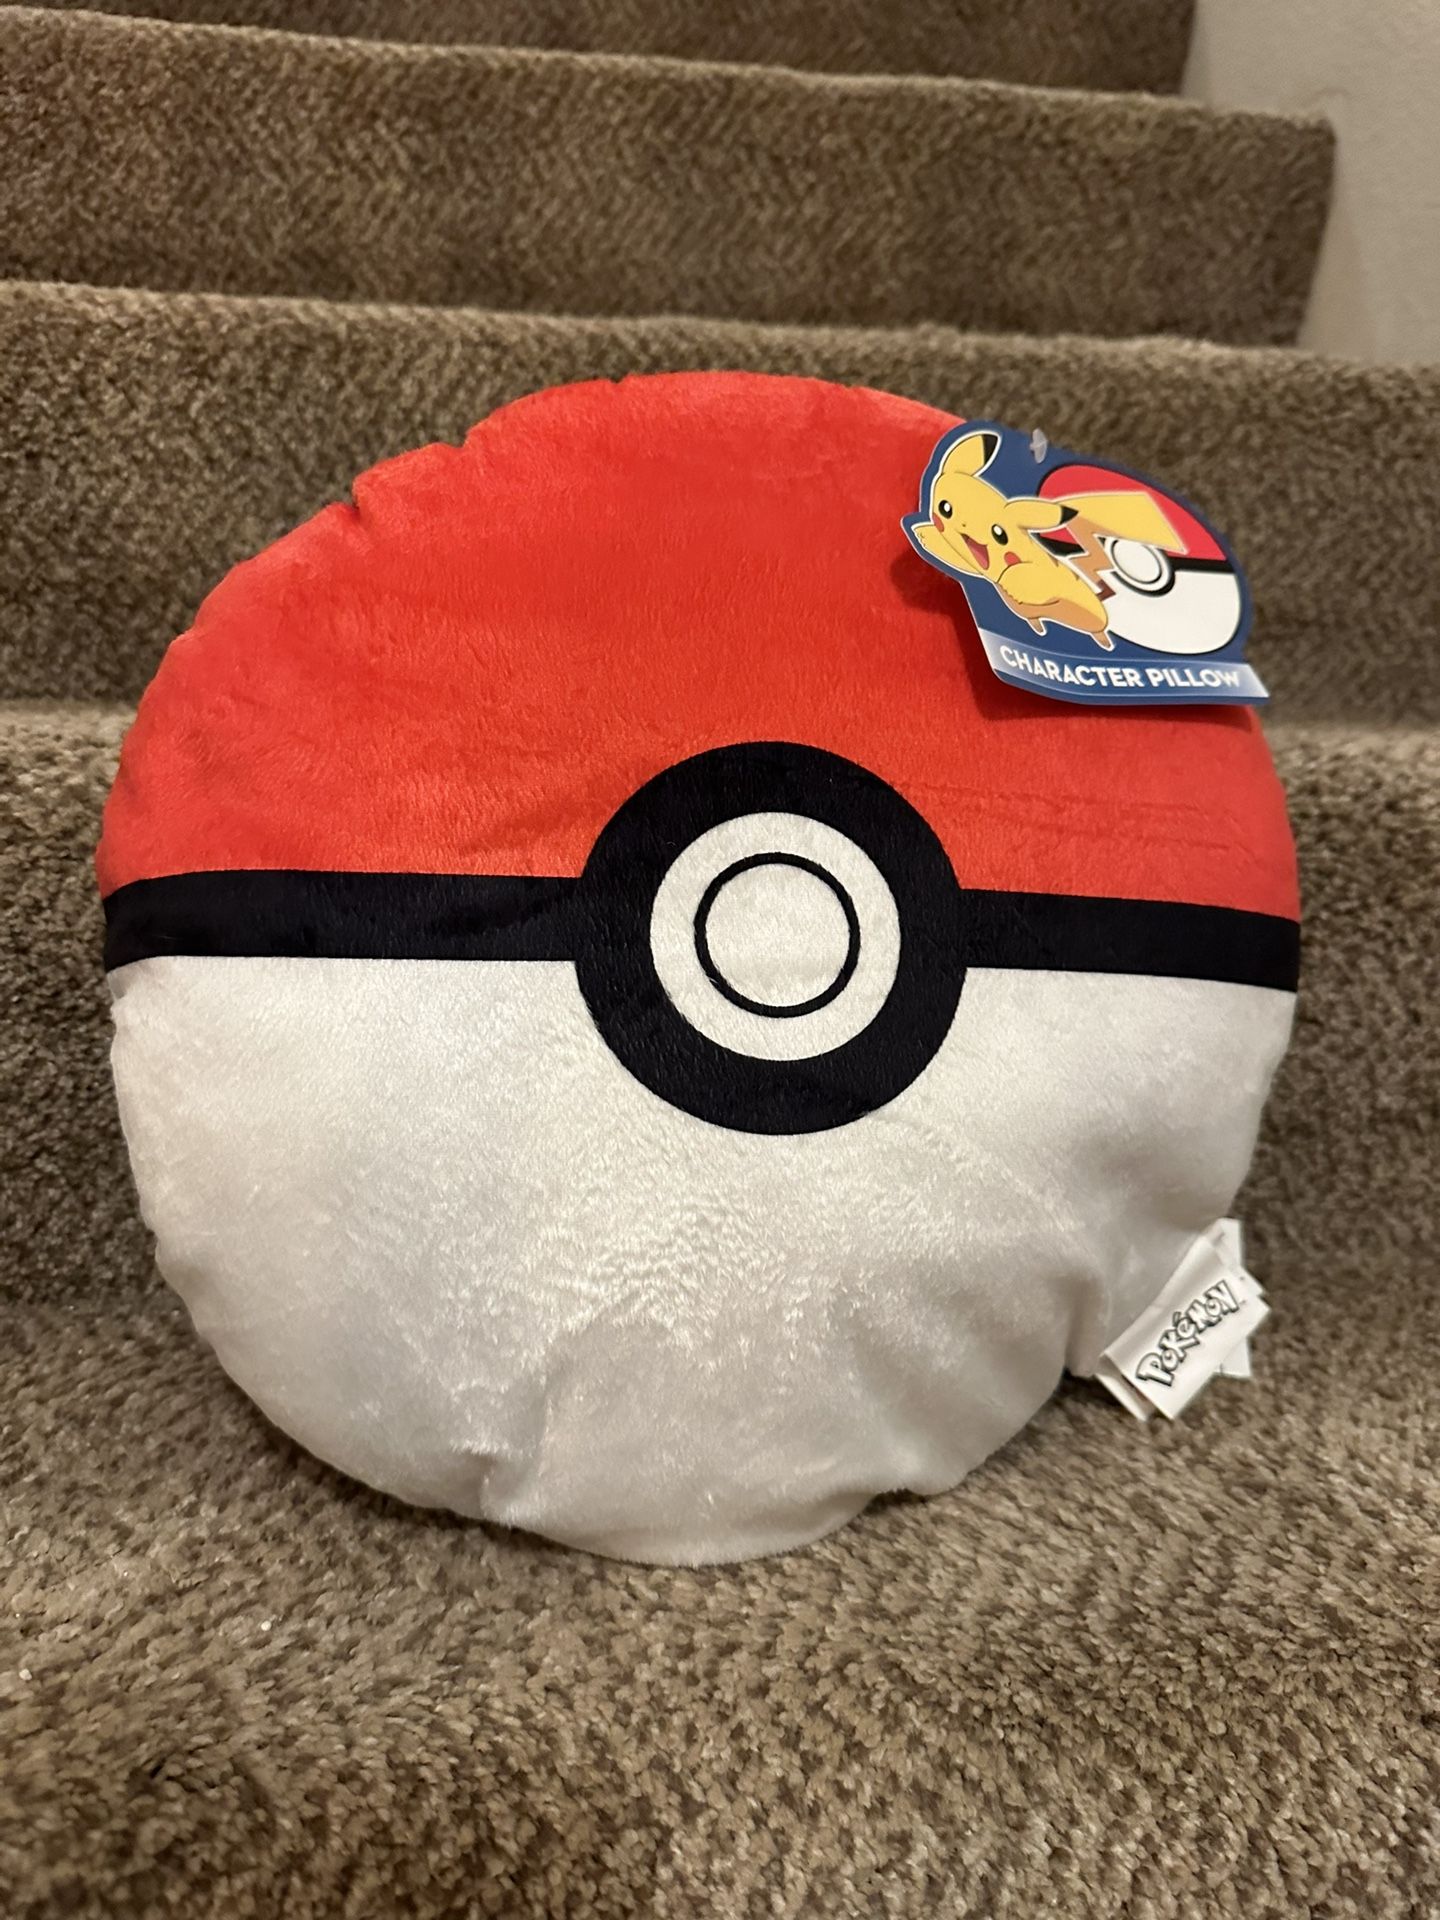 Gotta Catch Em' All Pokemon Character Poke Ball Pillow NWT 13x13